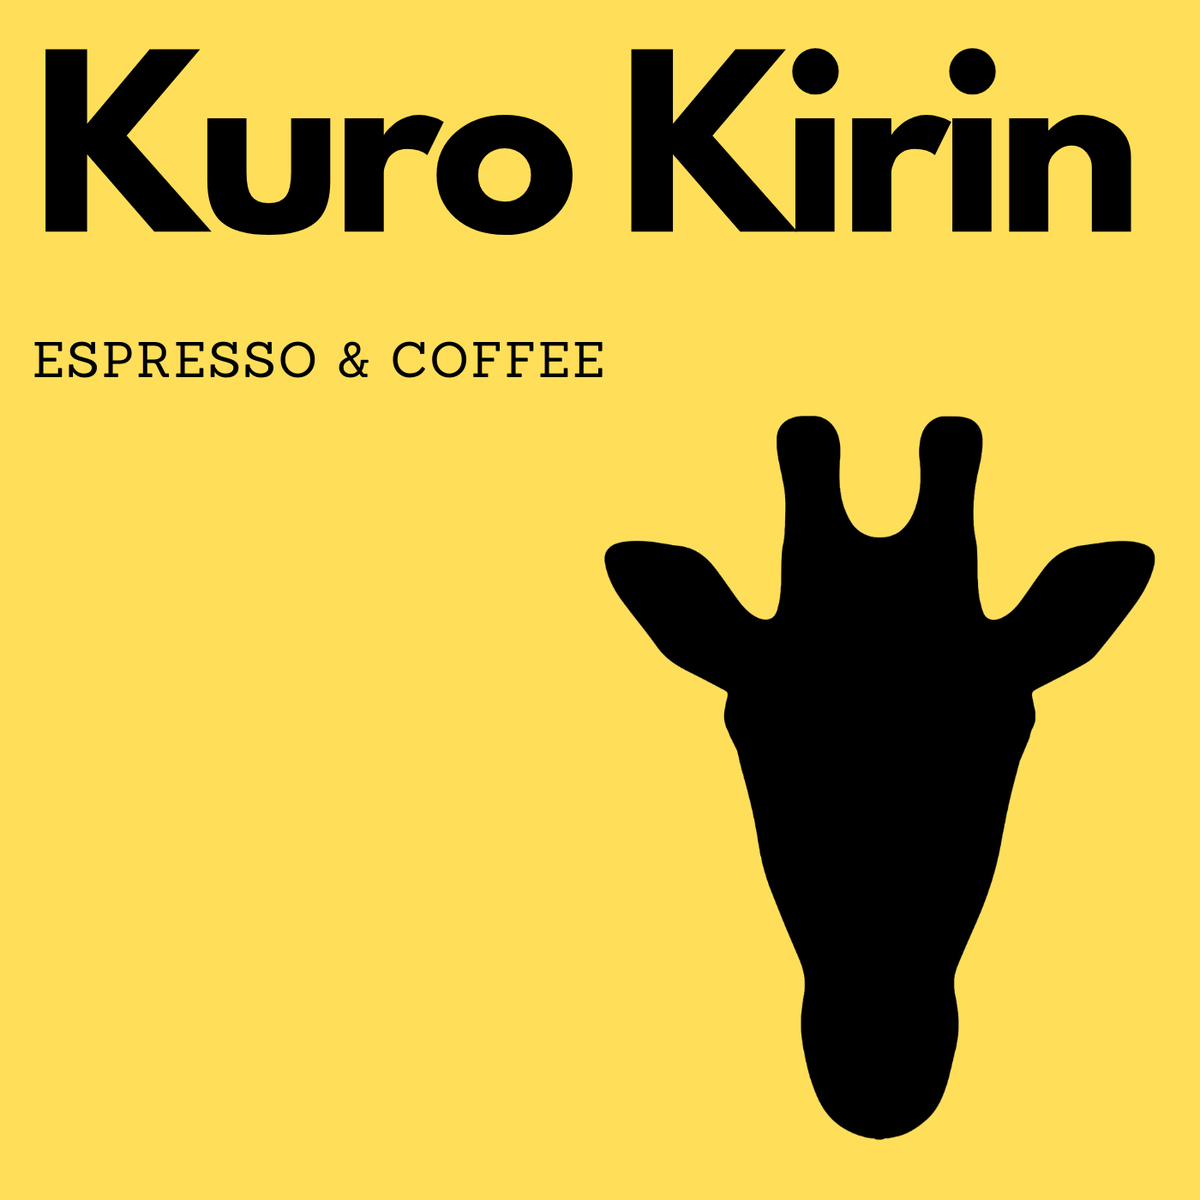 Kuro Kirin Espresso & Coffee